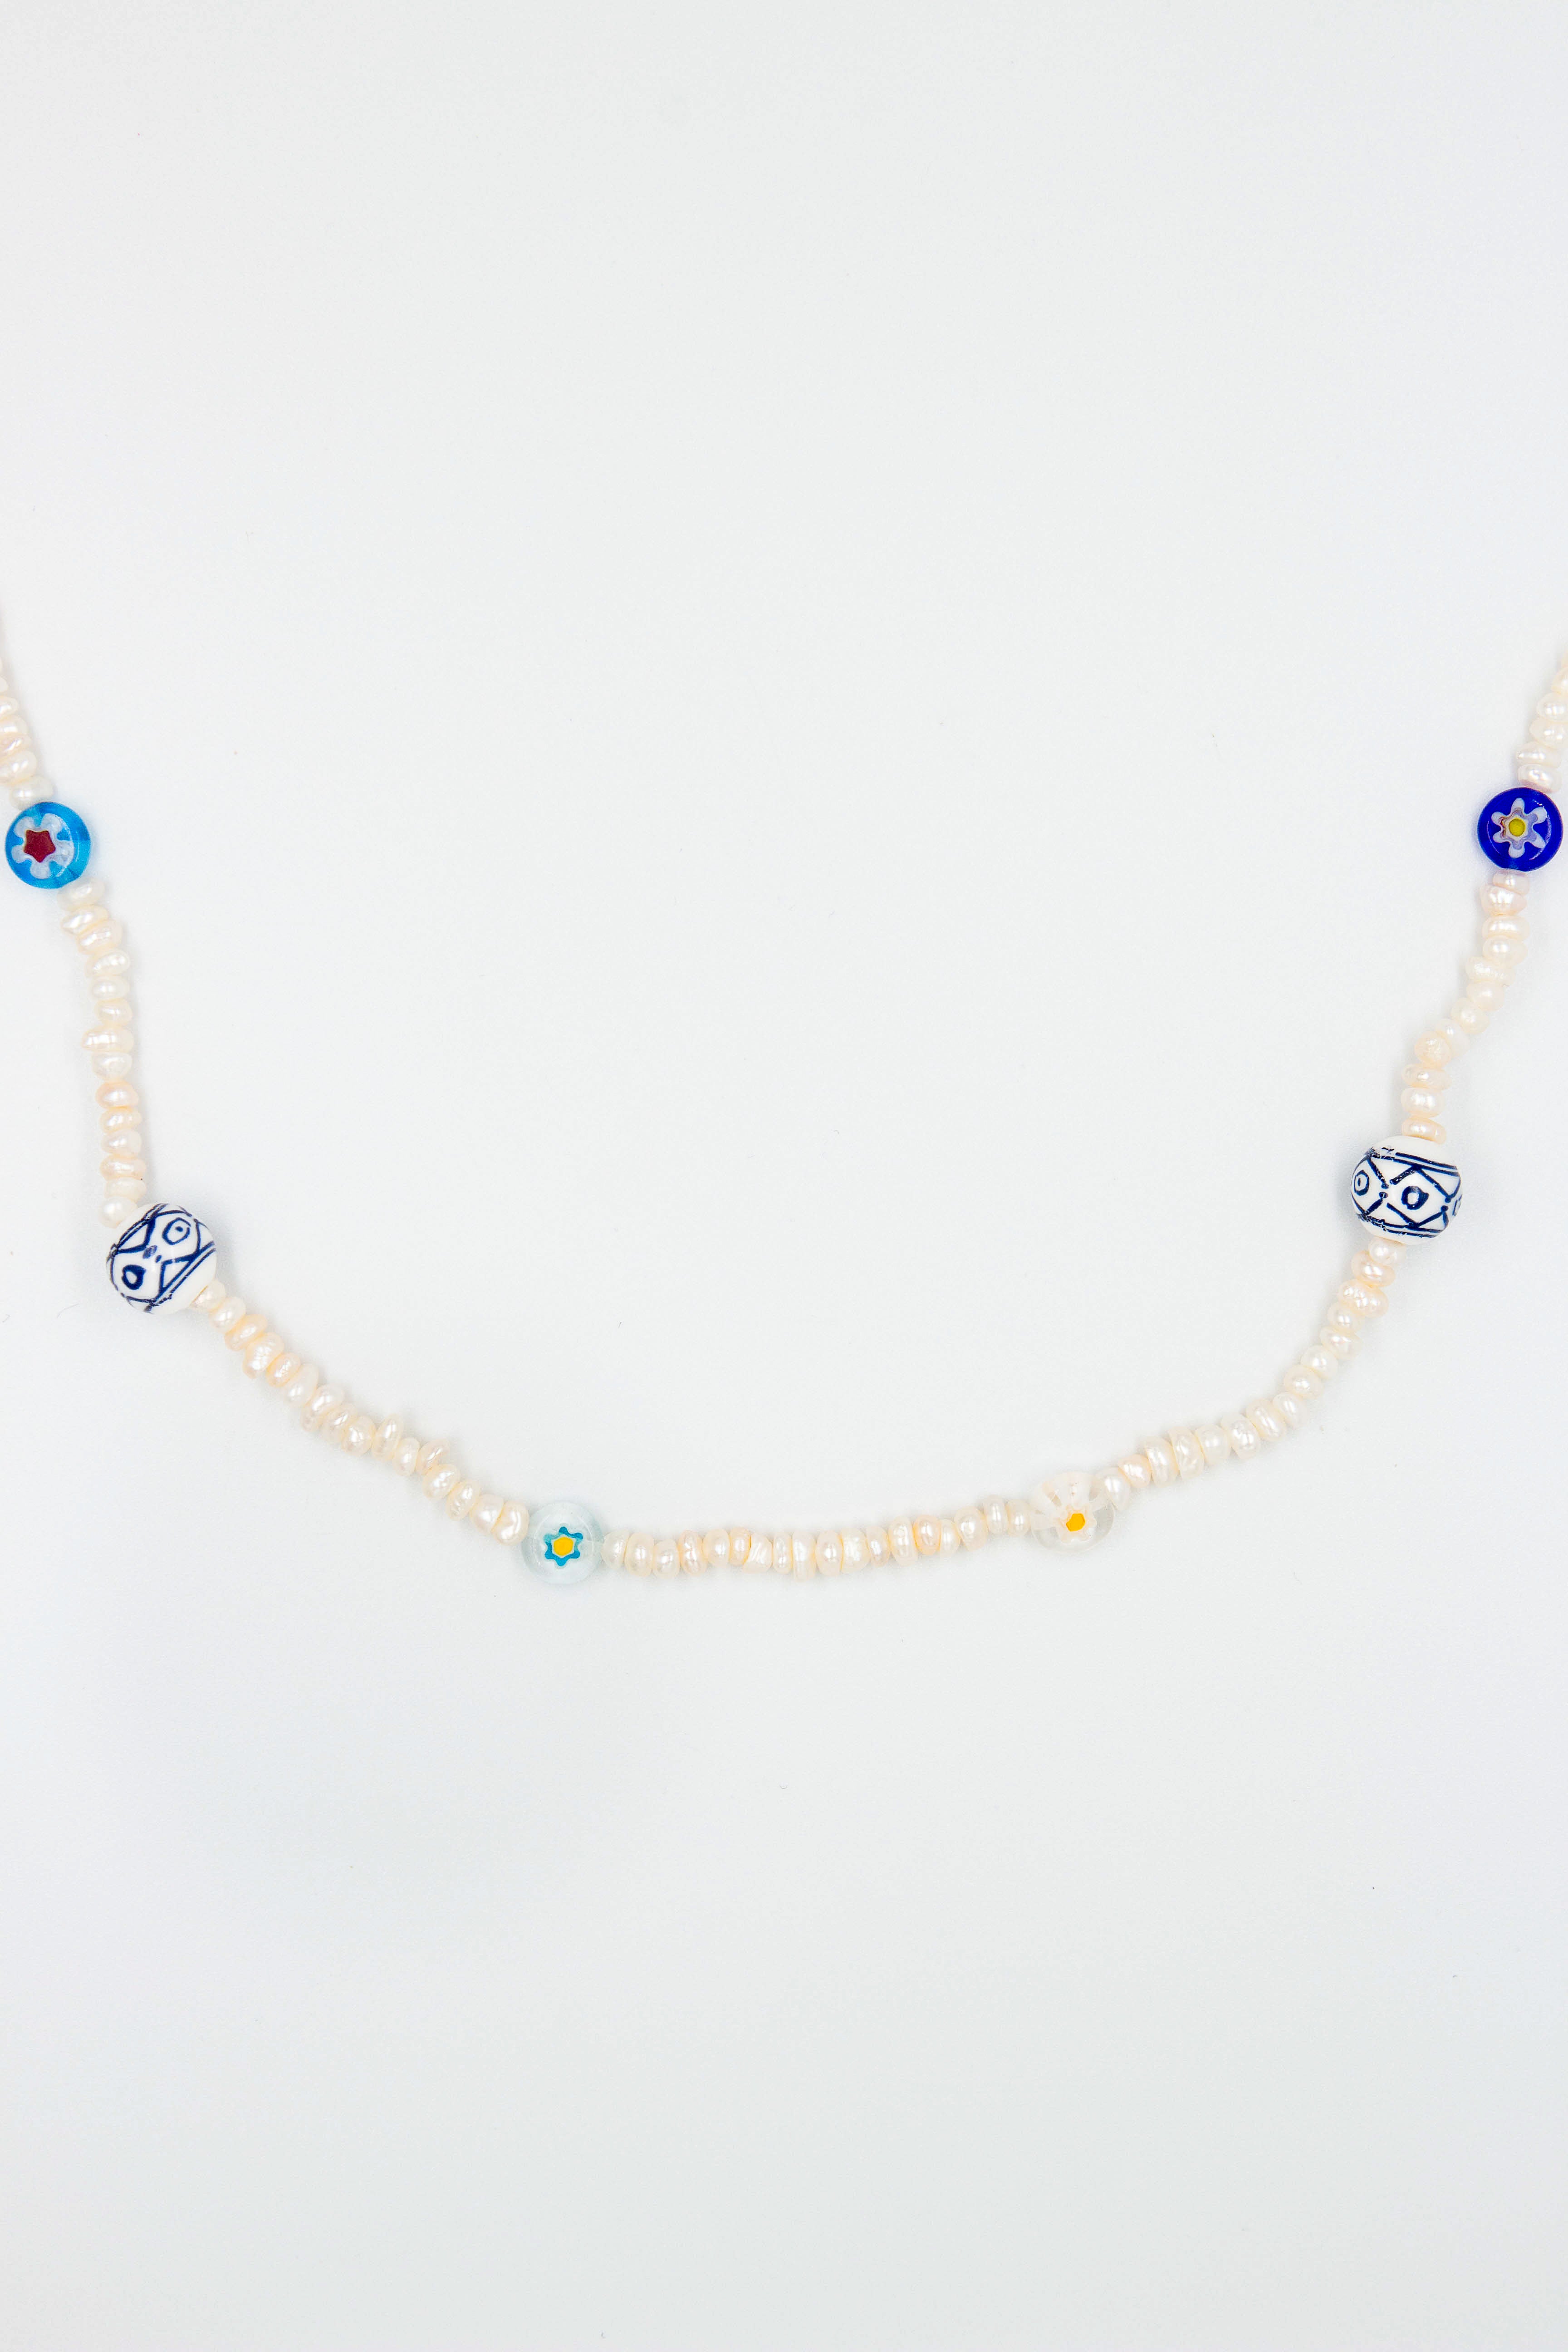 Oriental Giulia Necklace - caliorjewelry